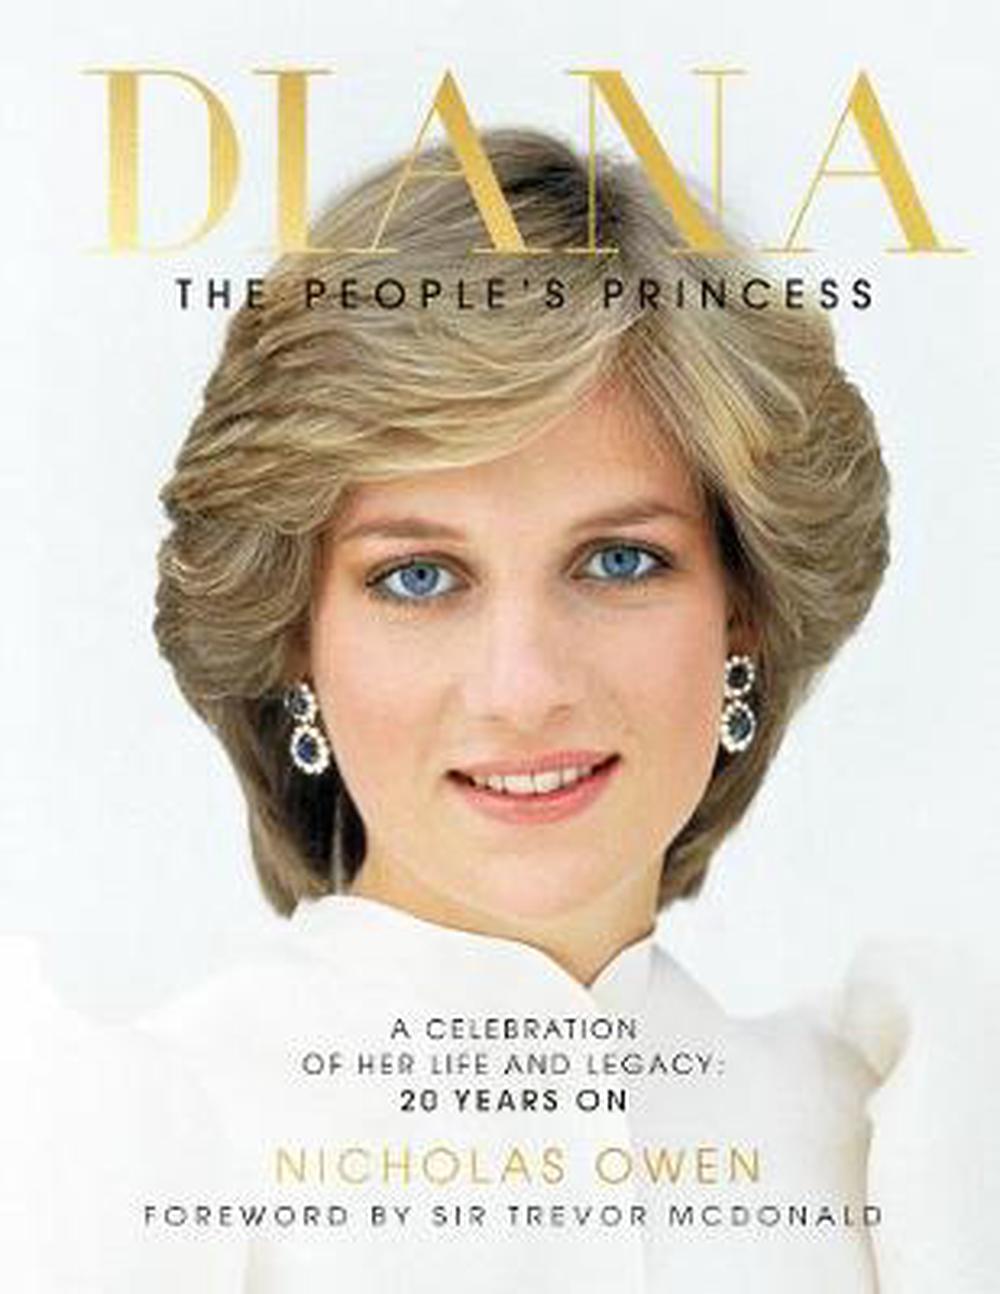 biography of princess diana pdf